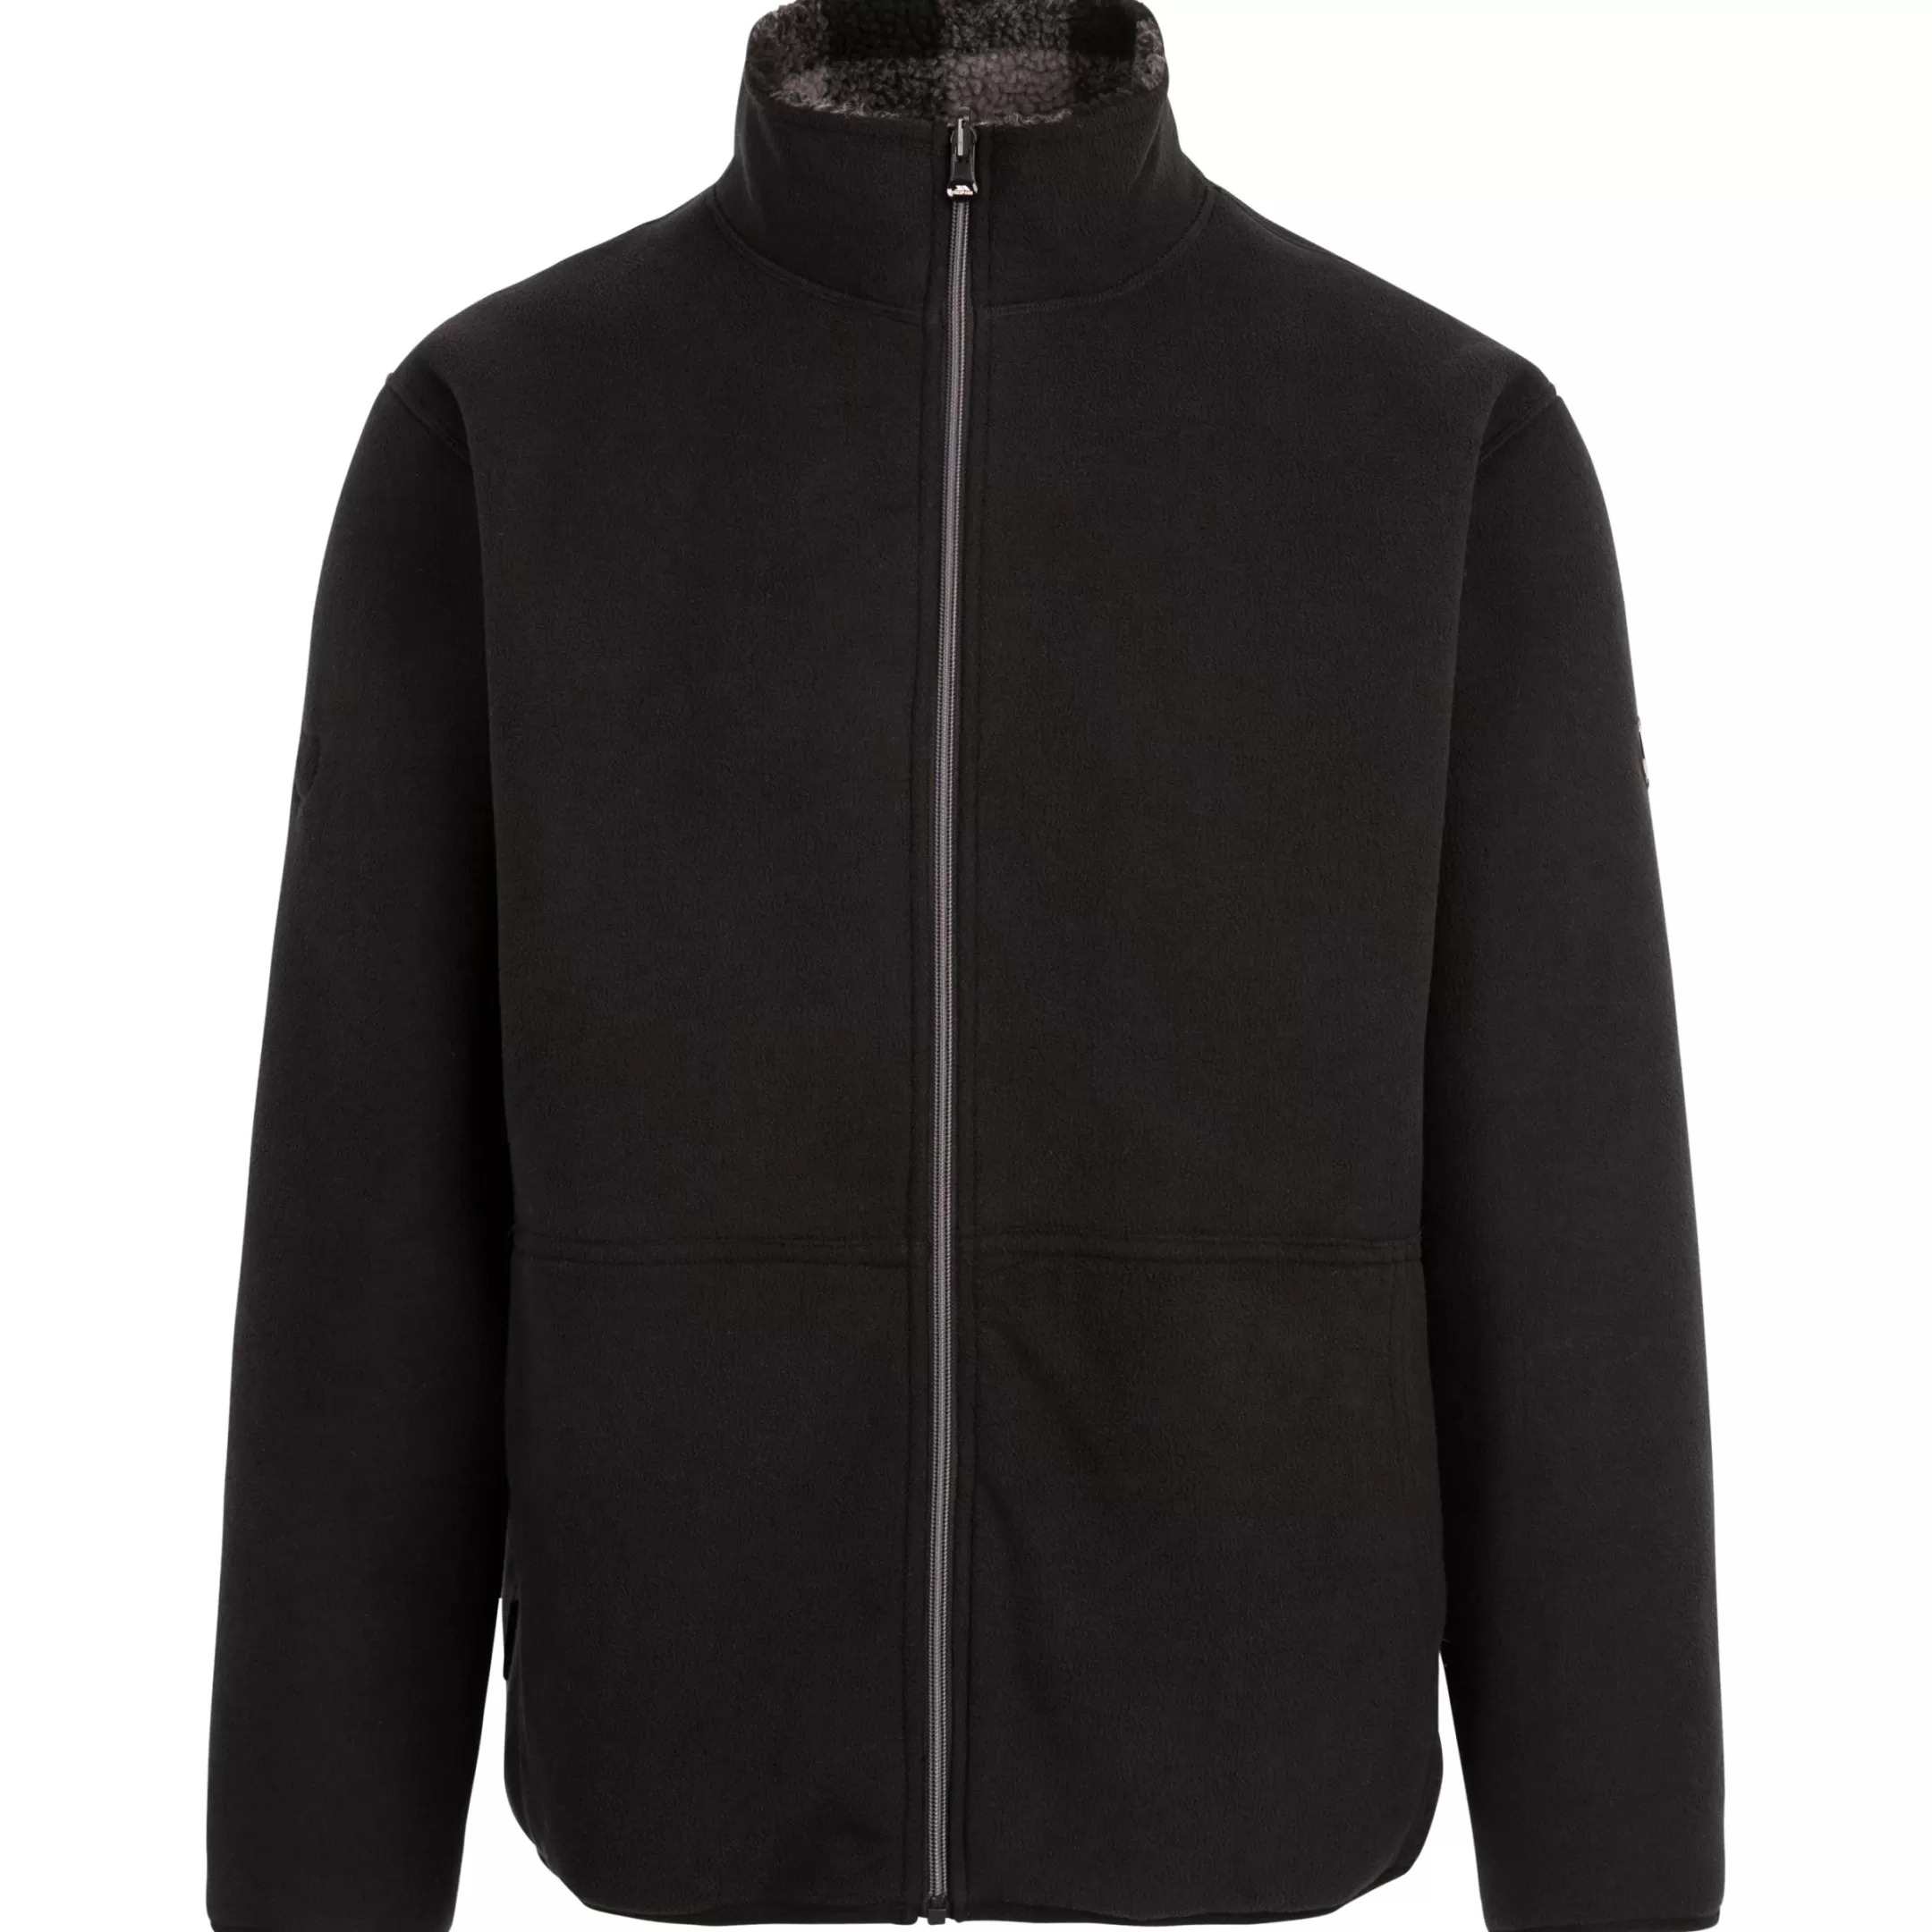 Men's Fleece Jacket AT300 Tatsfield | Trespass Discount